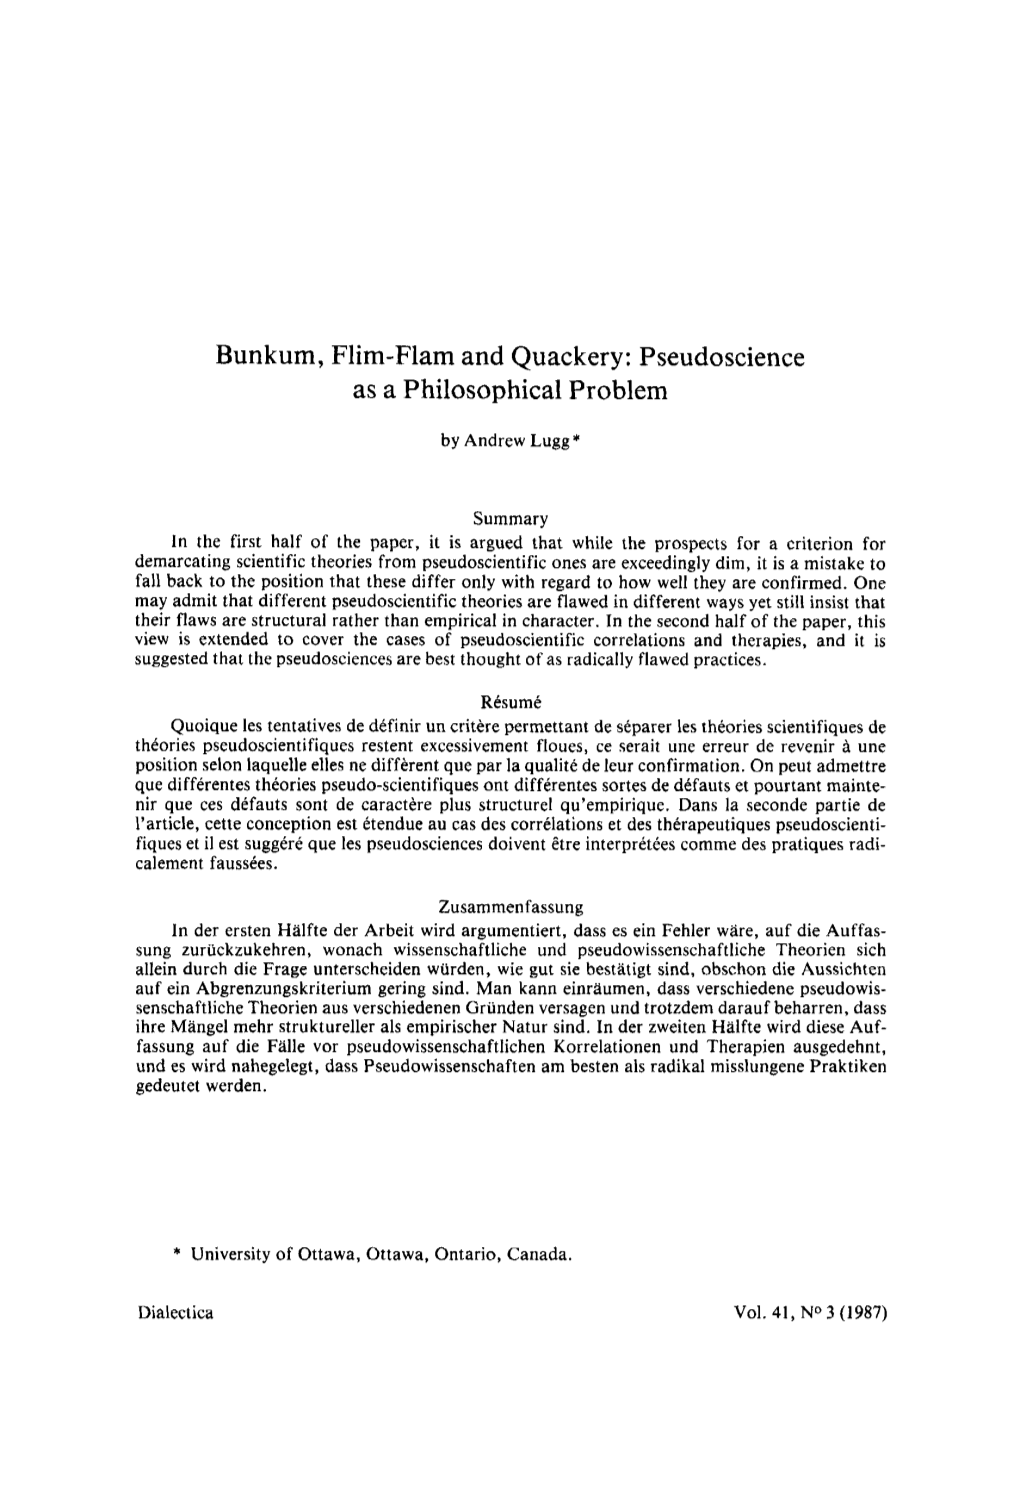 Bunkum, Flim-Flam and Quackery: Pseudoscience As a Philosophical Problem